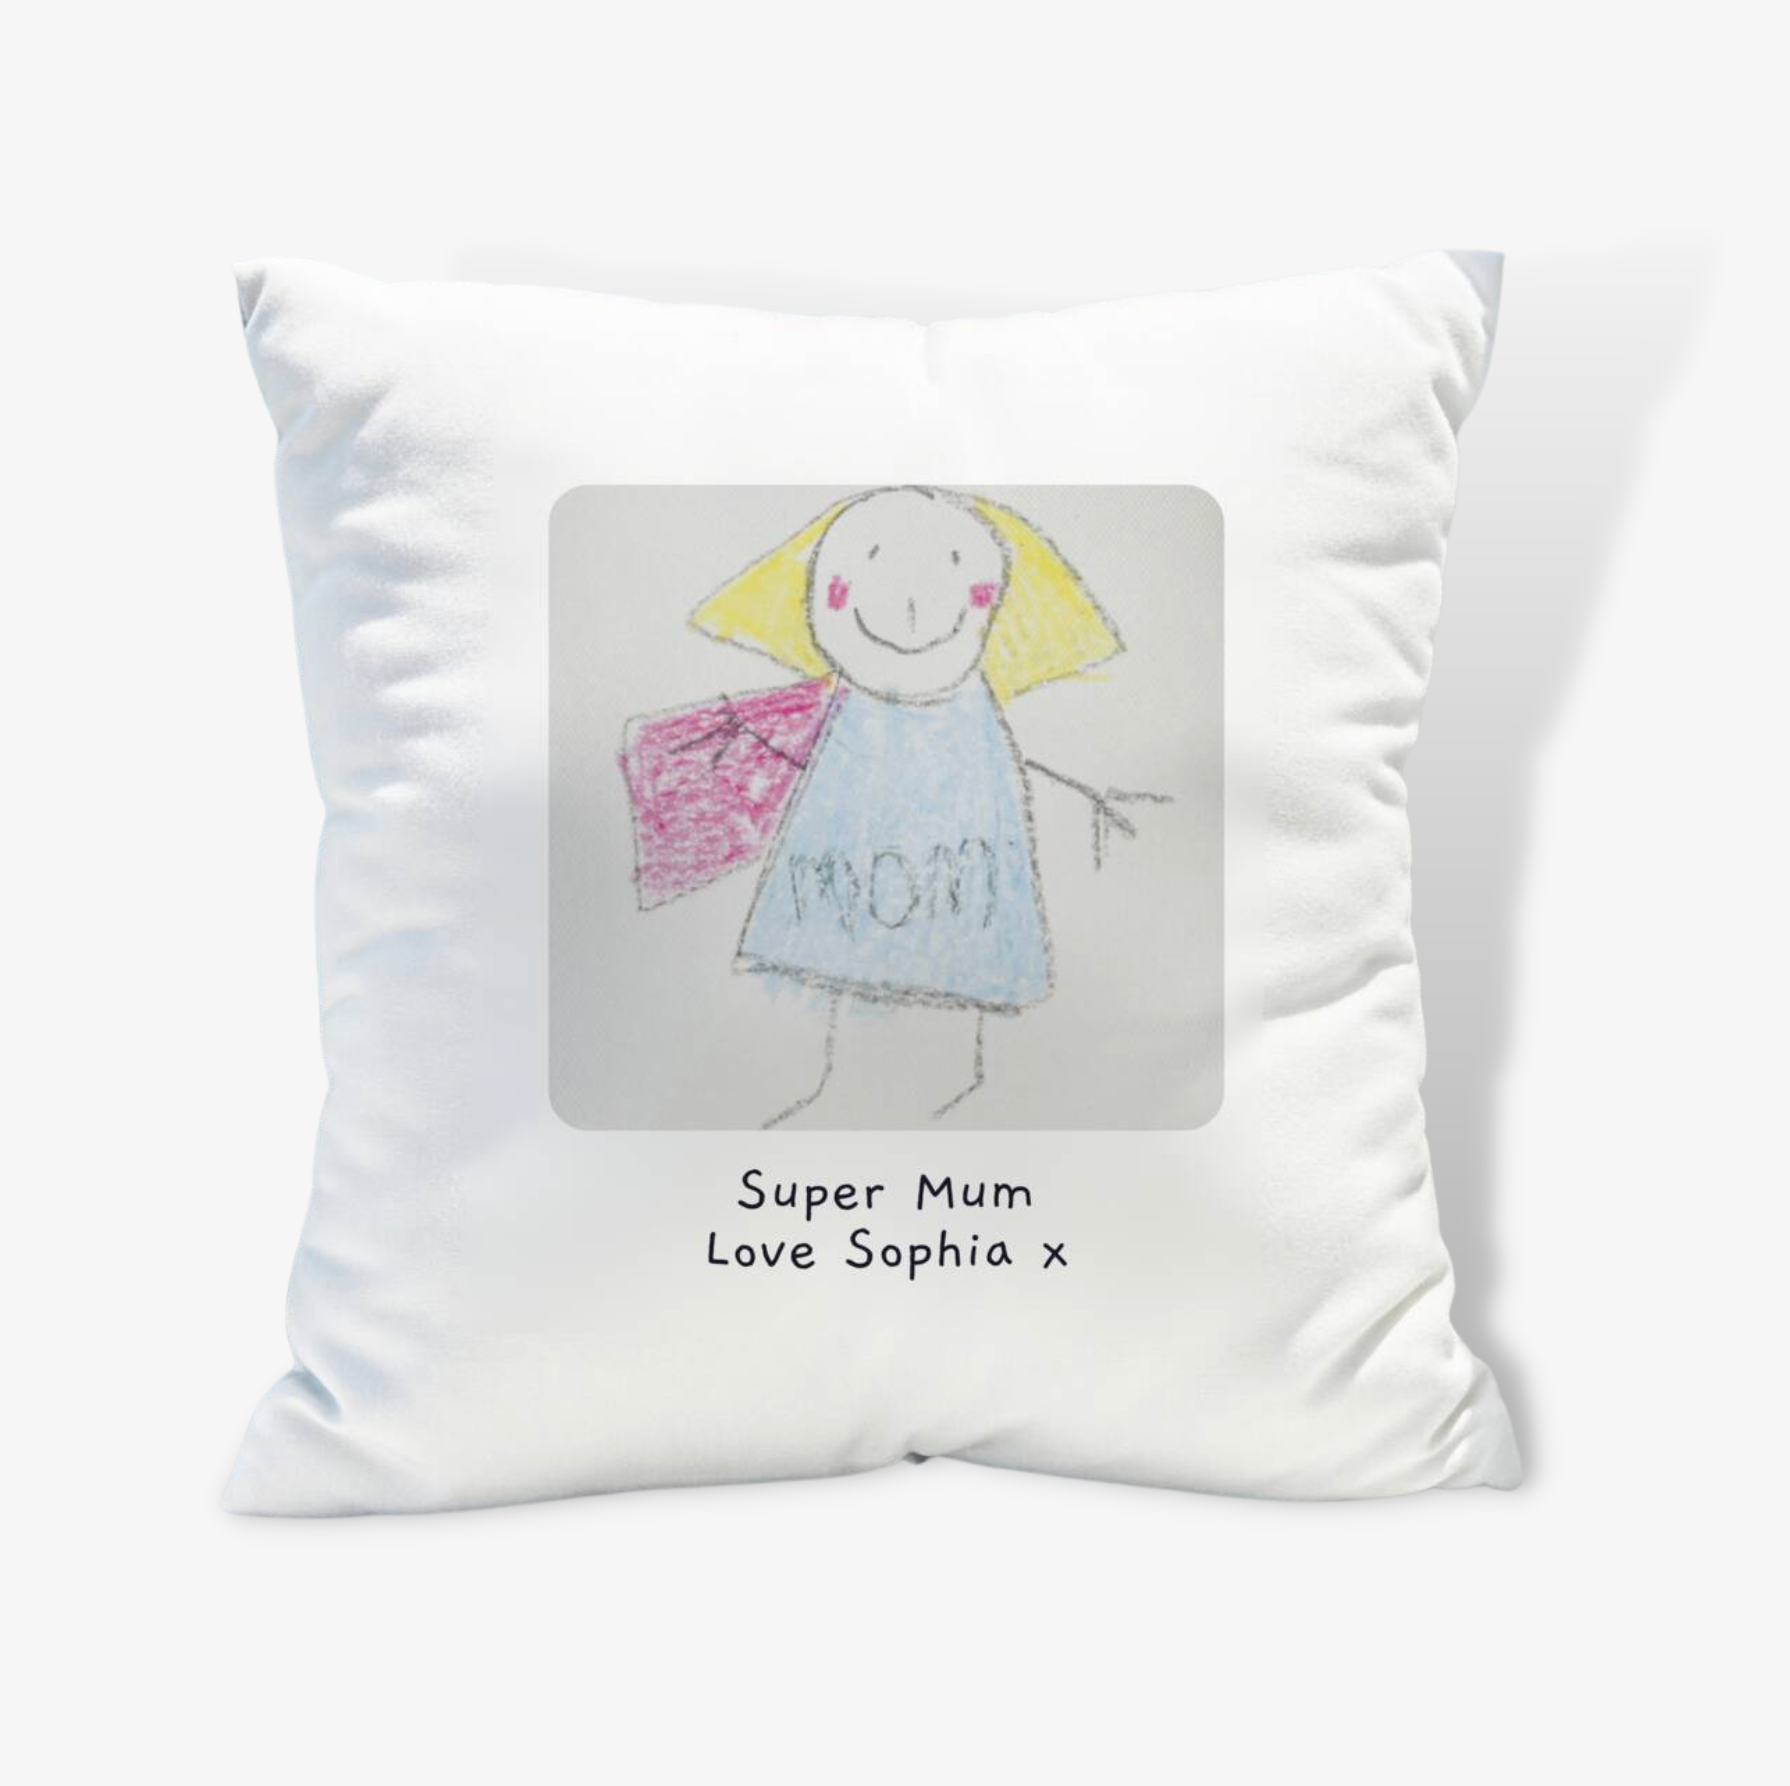 Personalised Childrens Drawing Photo Upload Cushion